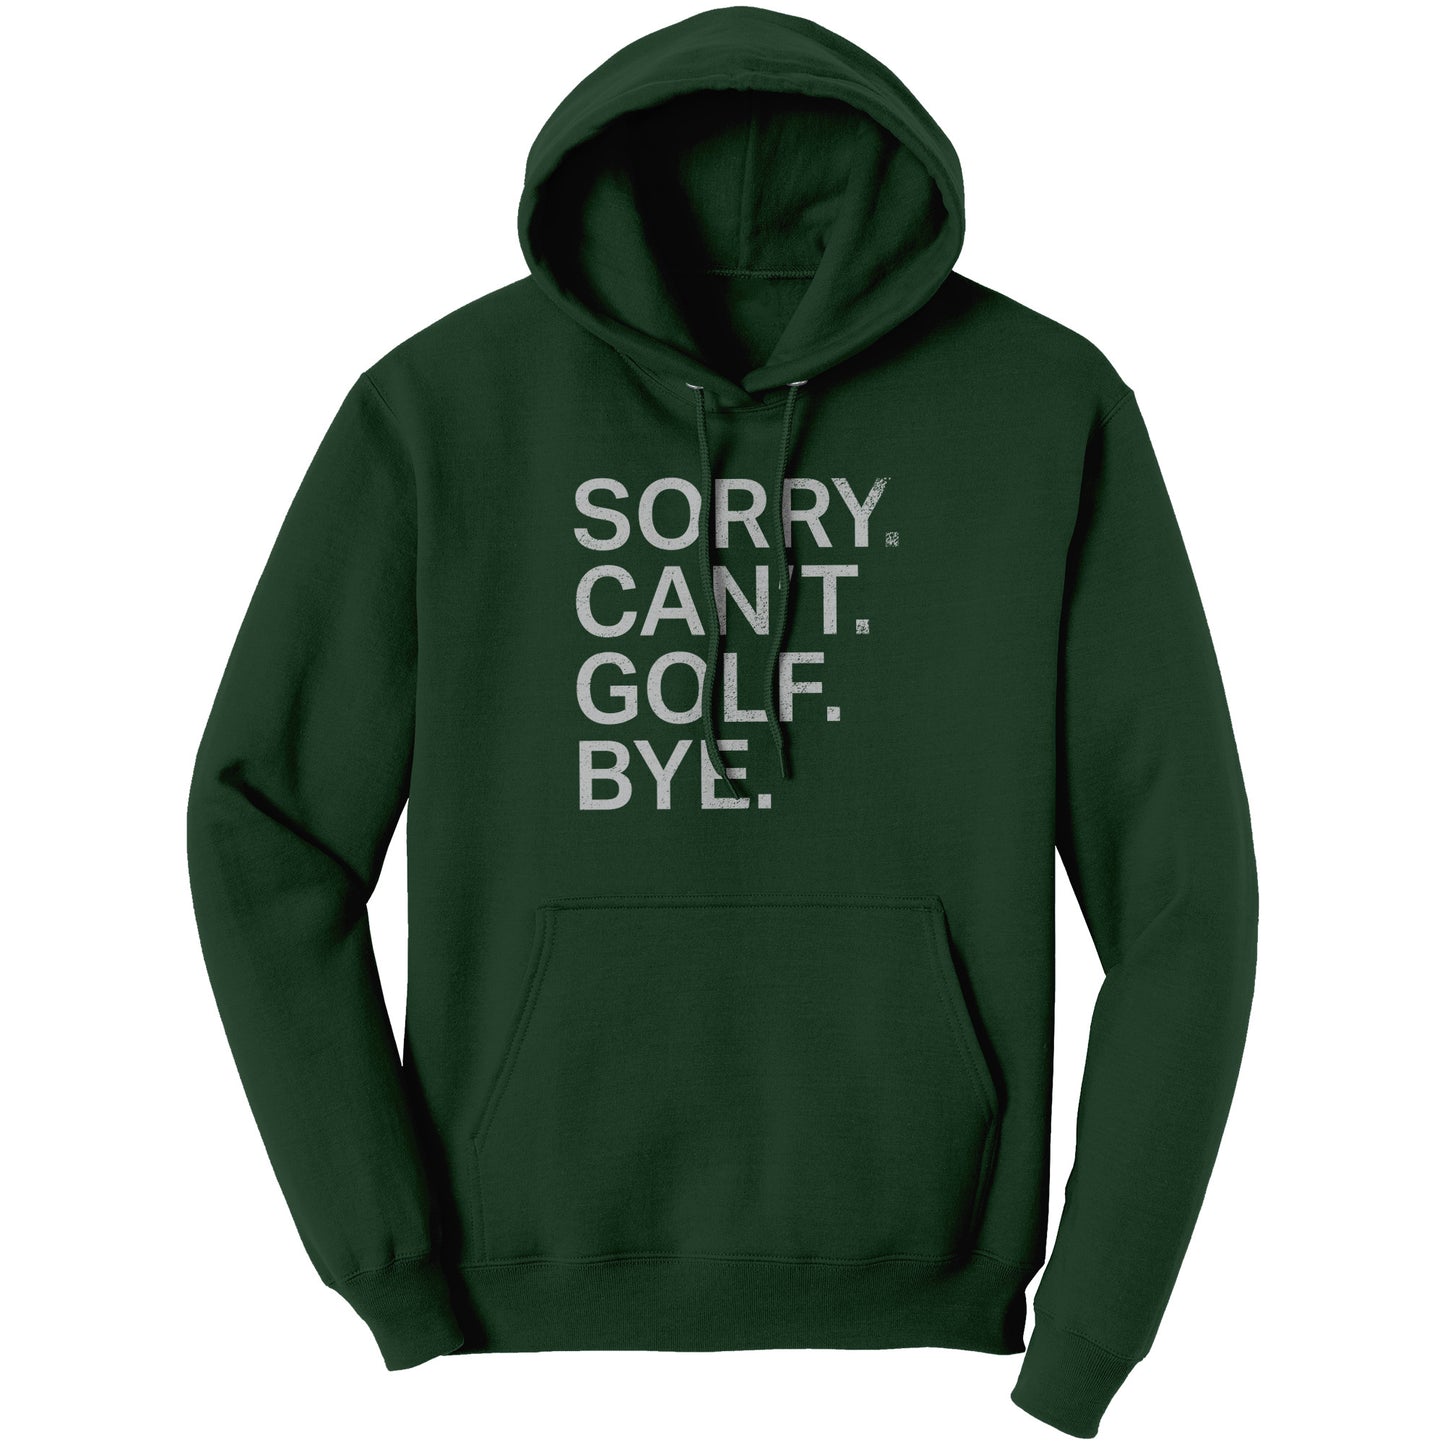 Sorry. Can't. Golf. Bye. Hoodie.